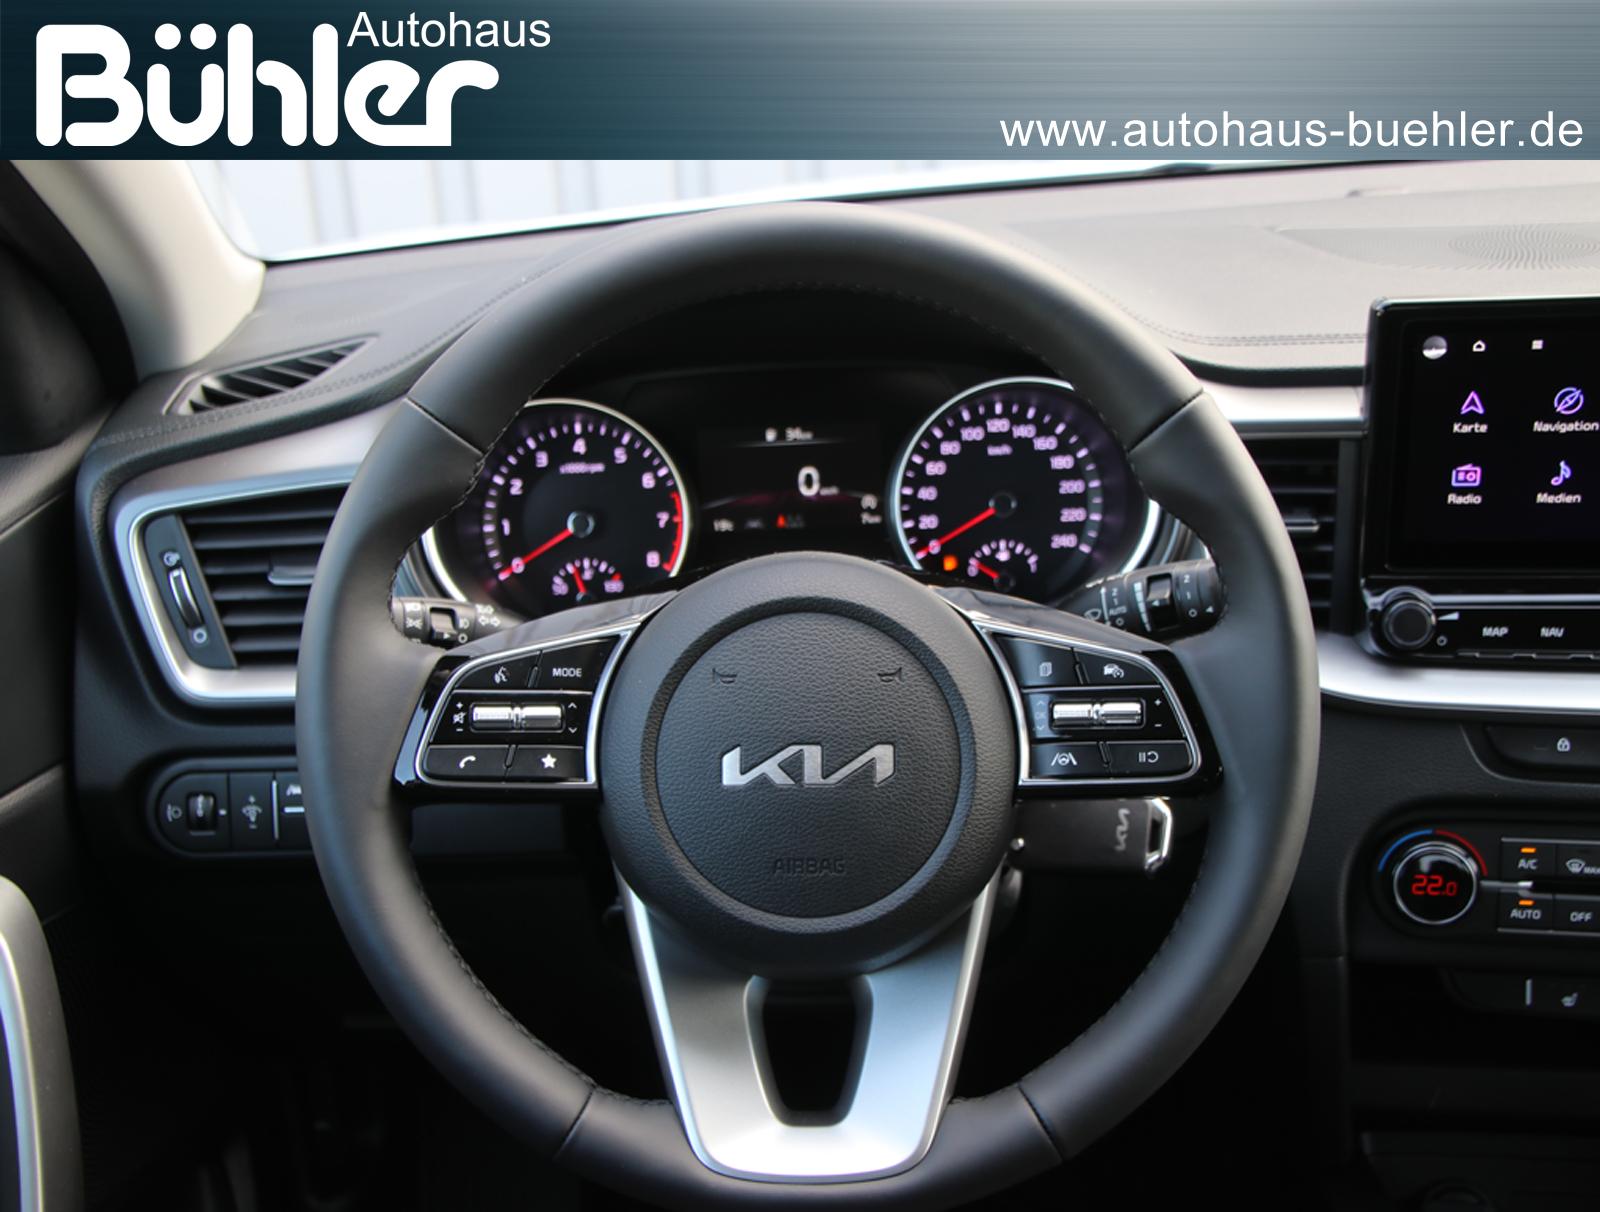 Kia Ceed Sportswagon 1.5 T-GDI Vision - Interieur - pentametall metallic